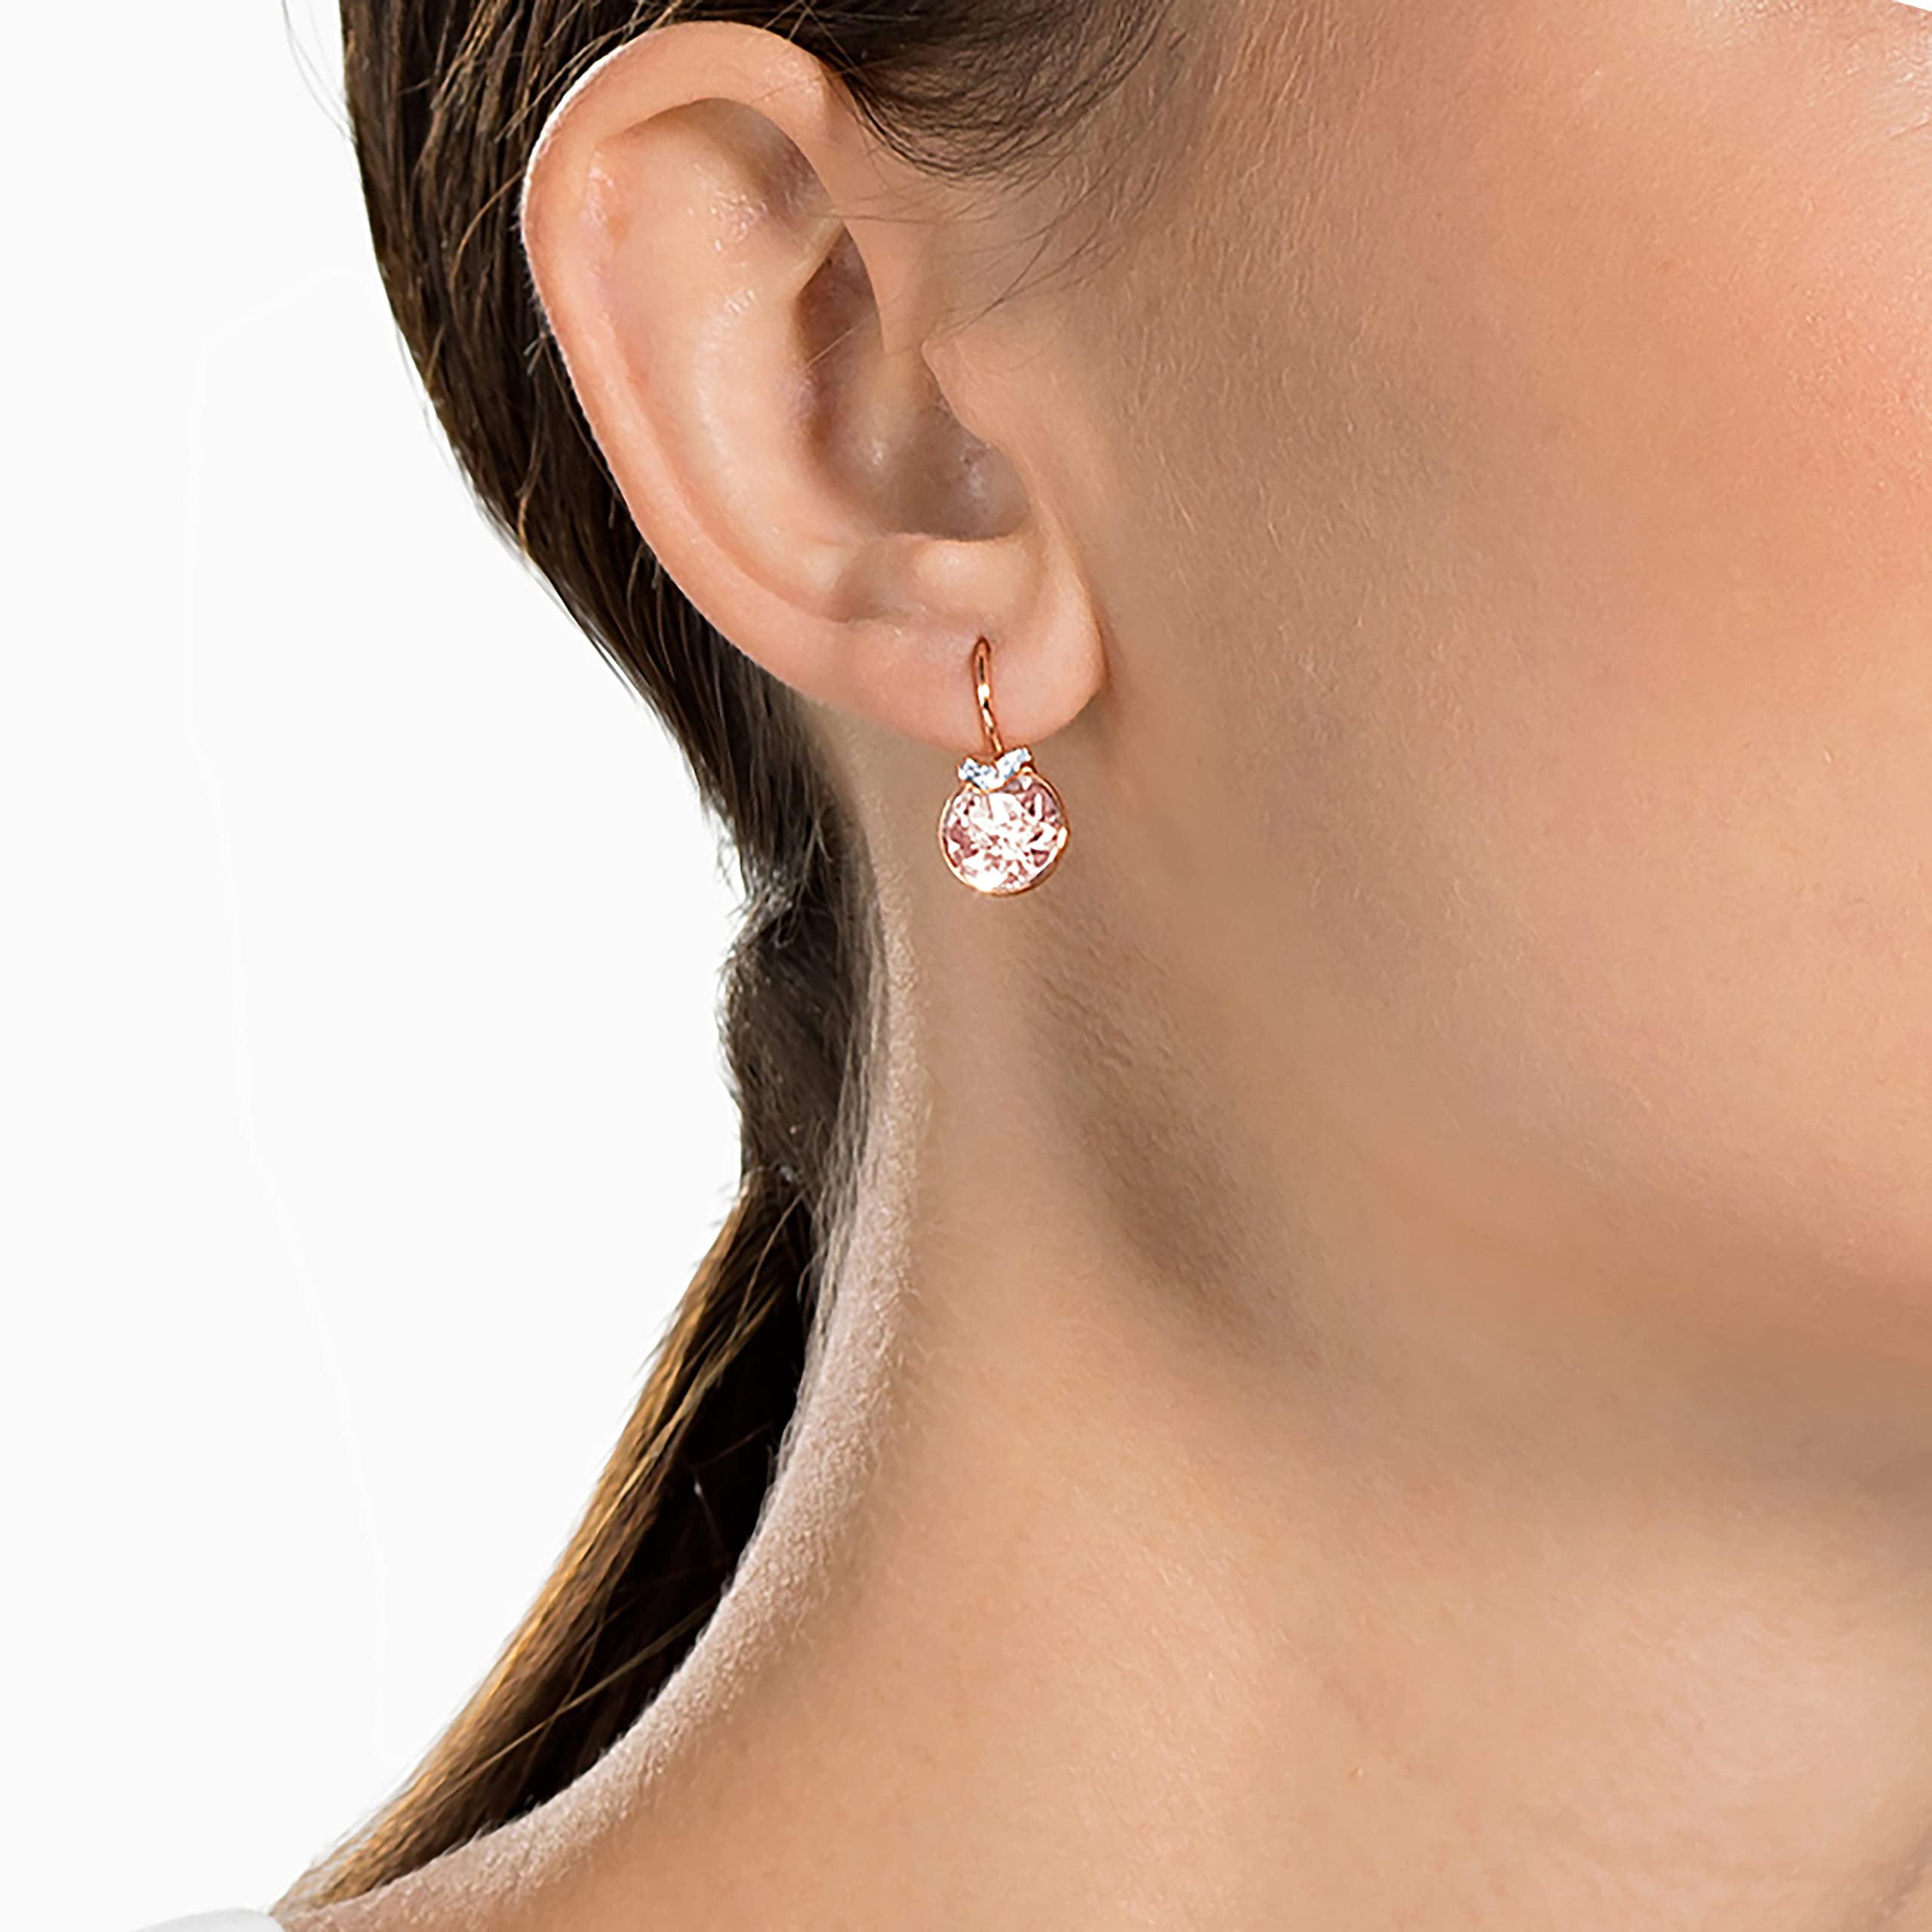 Swarovski Bella Crystal Earrings Collection